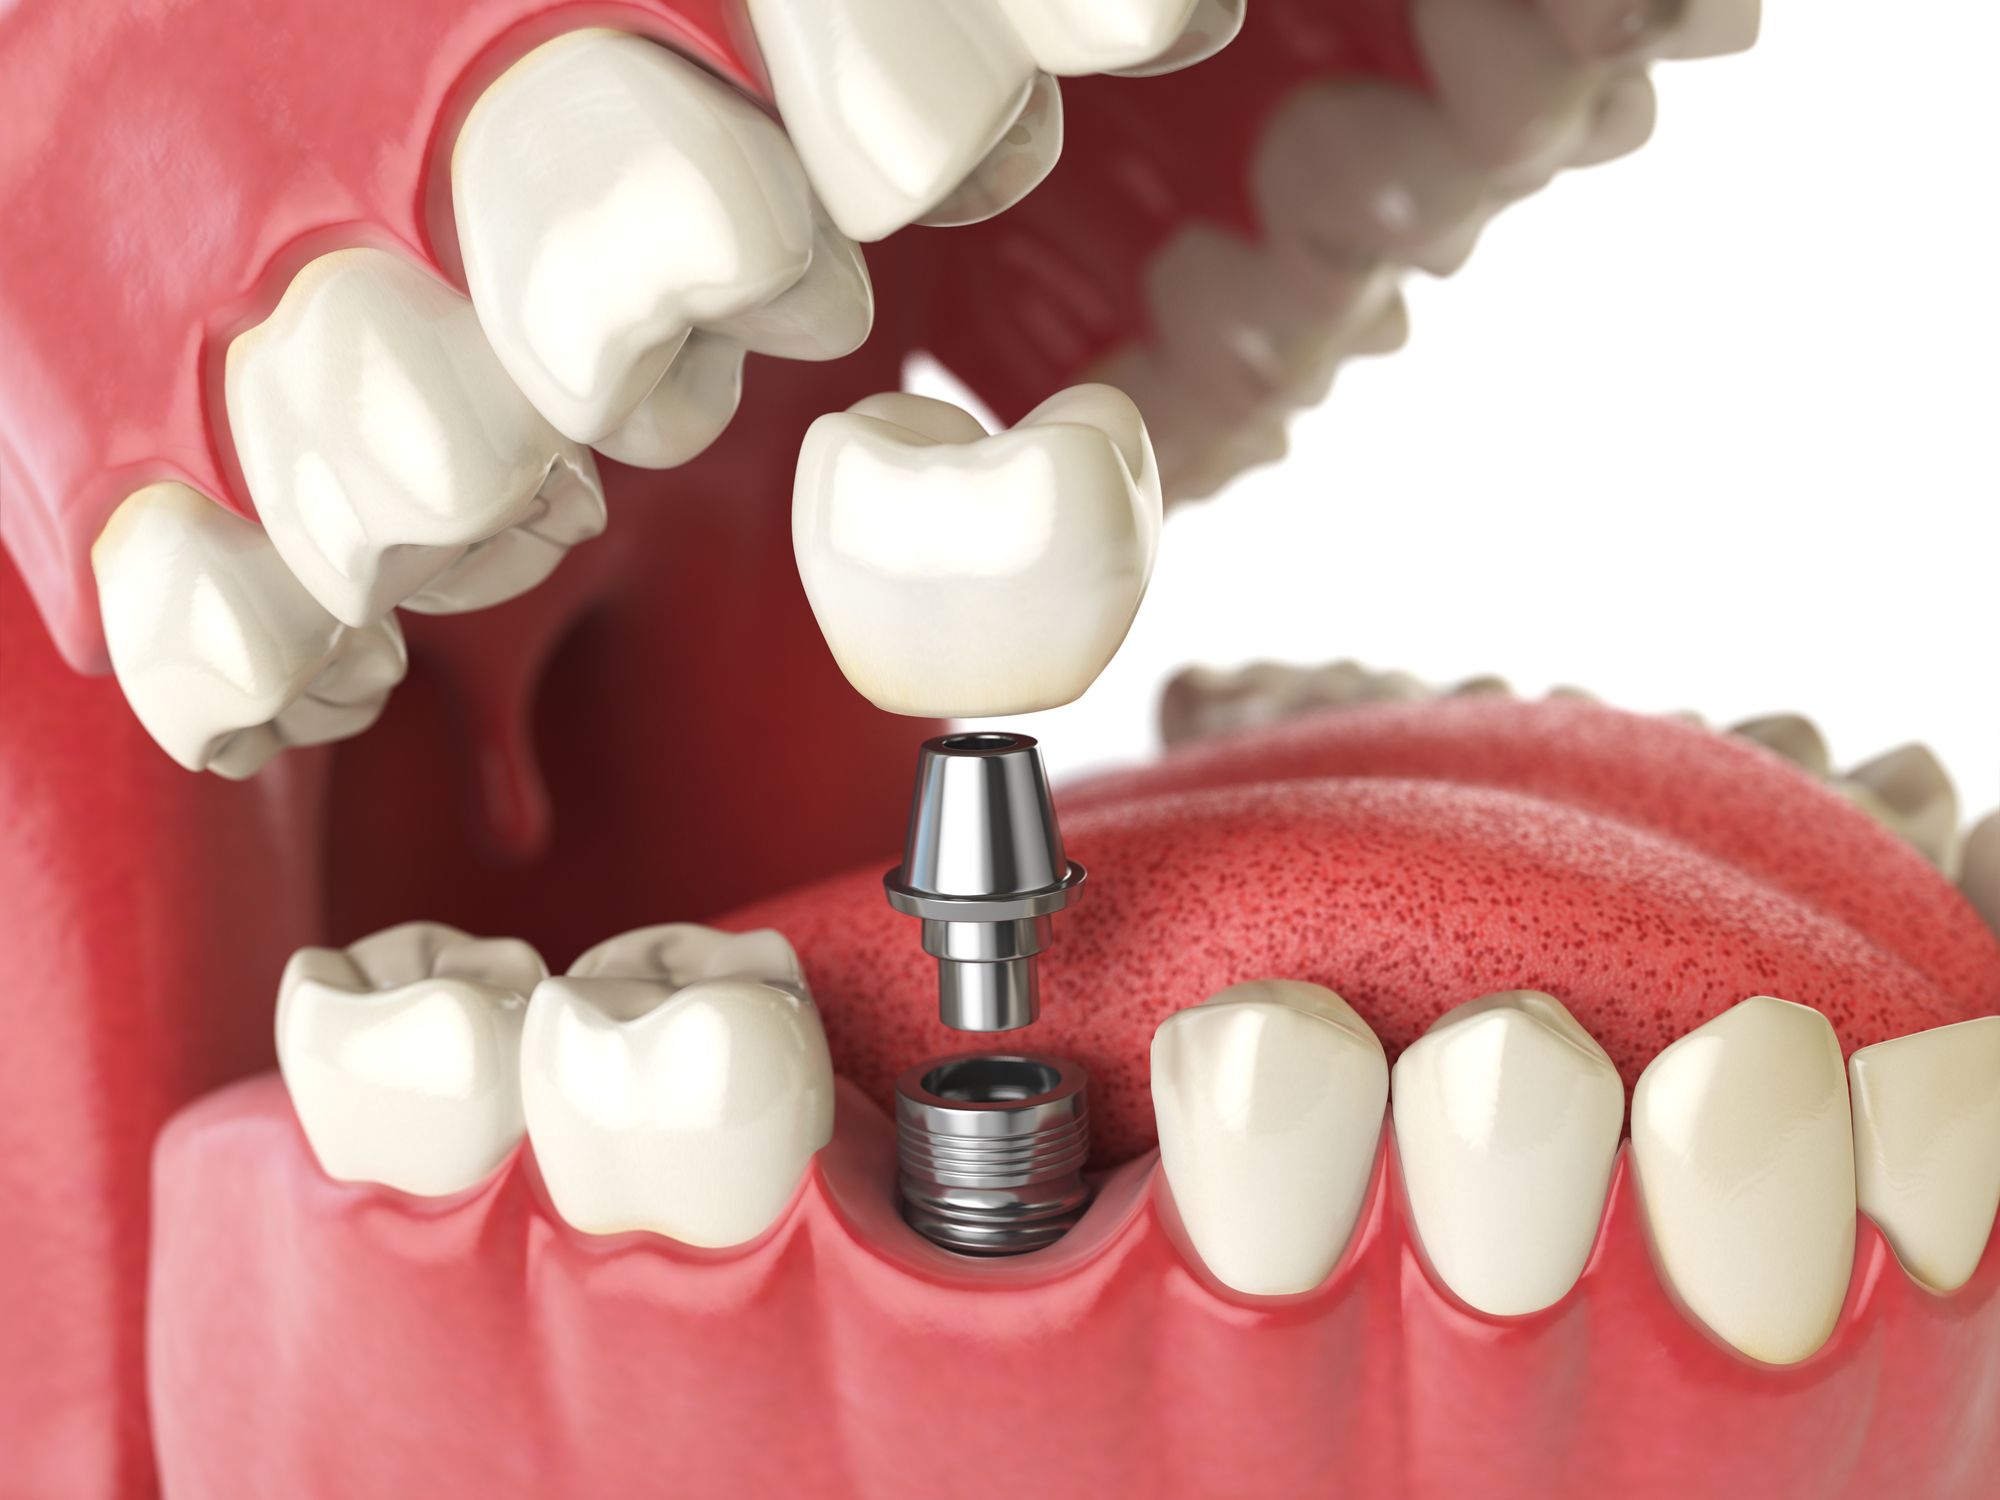 Diabetic Patients and Dental Implants